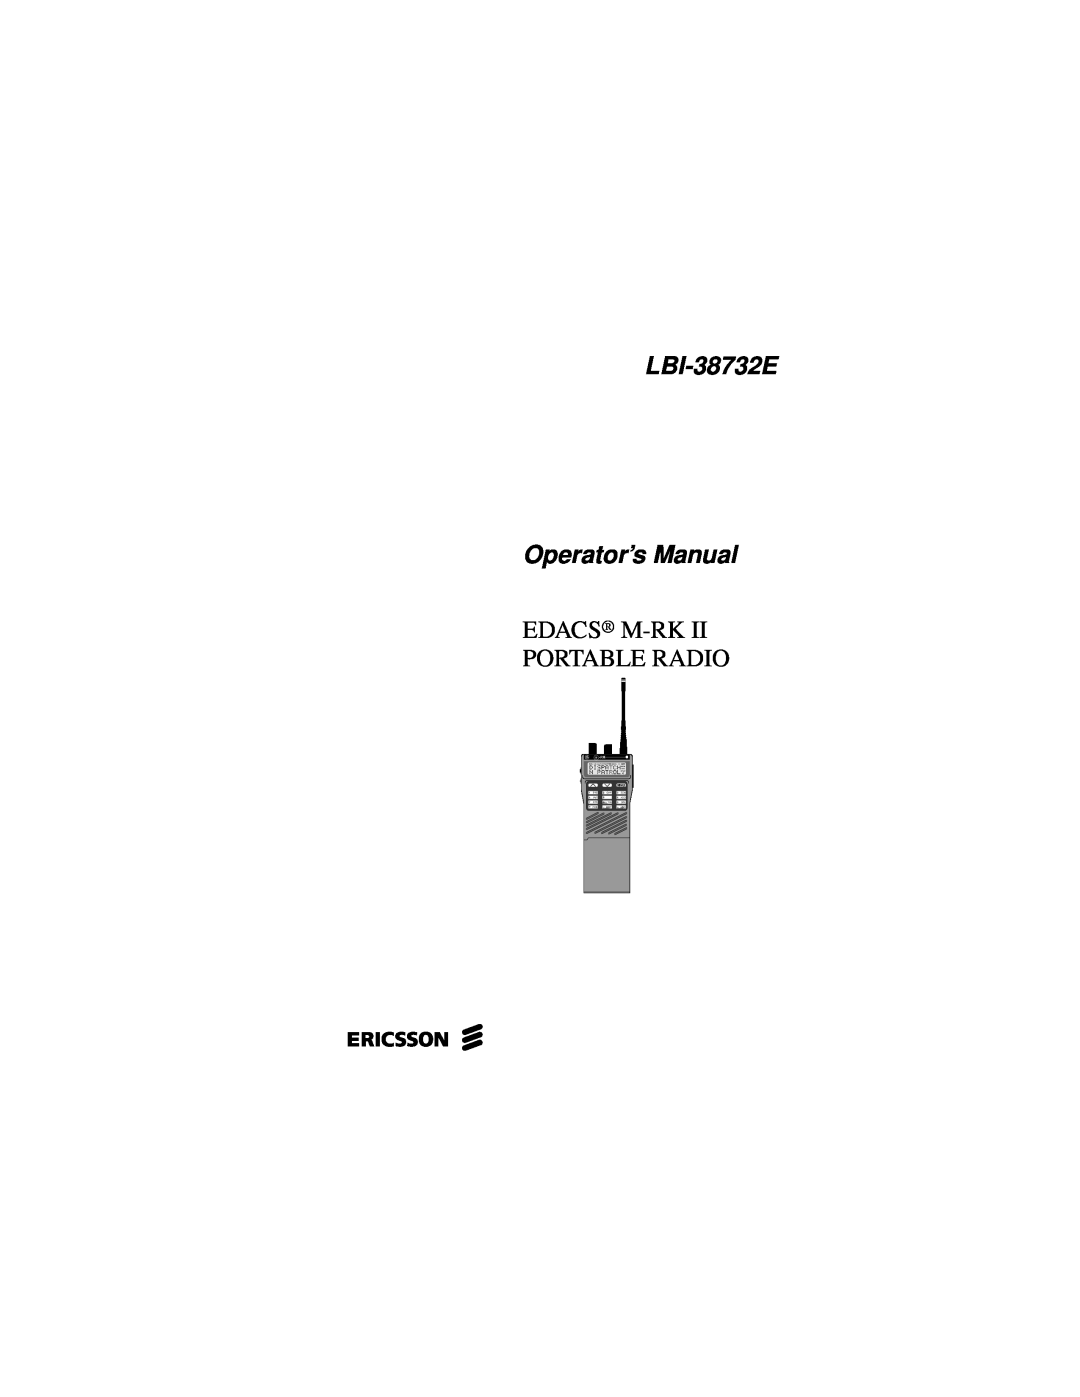 Ericsson manual Edacs M-Rk Ii Portable Radio, LBI-38732E Operator’s Manual 